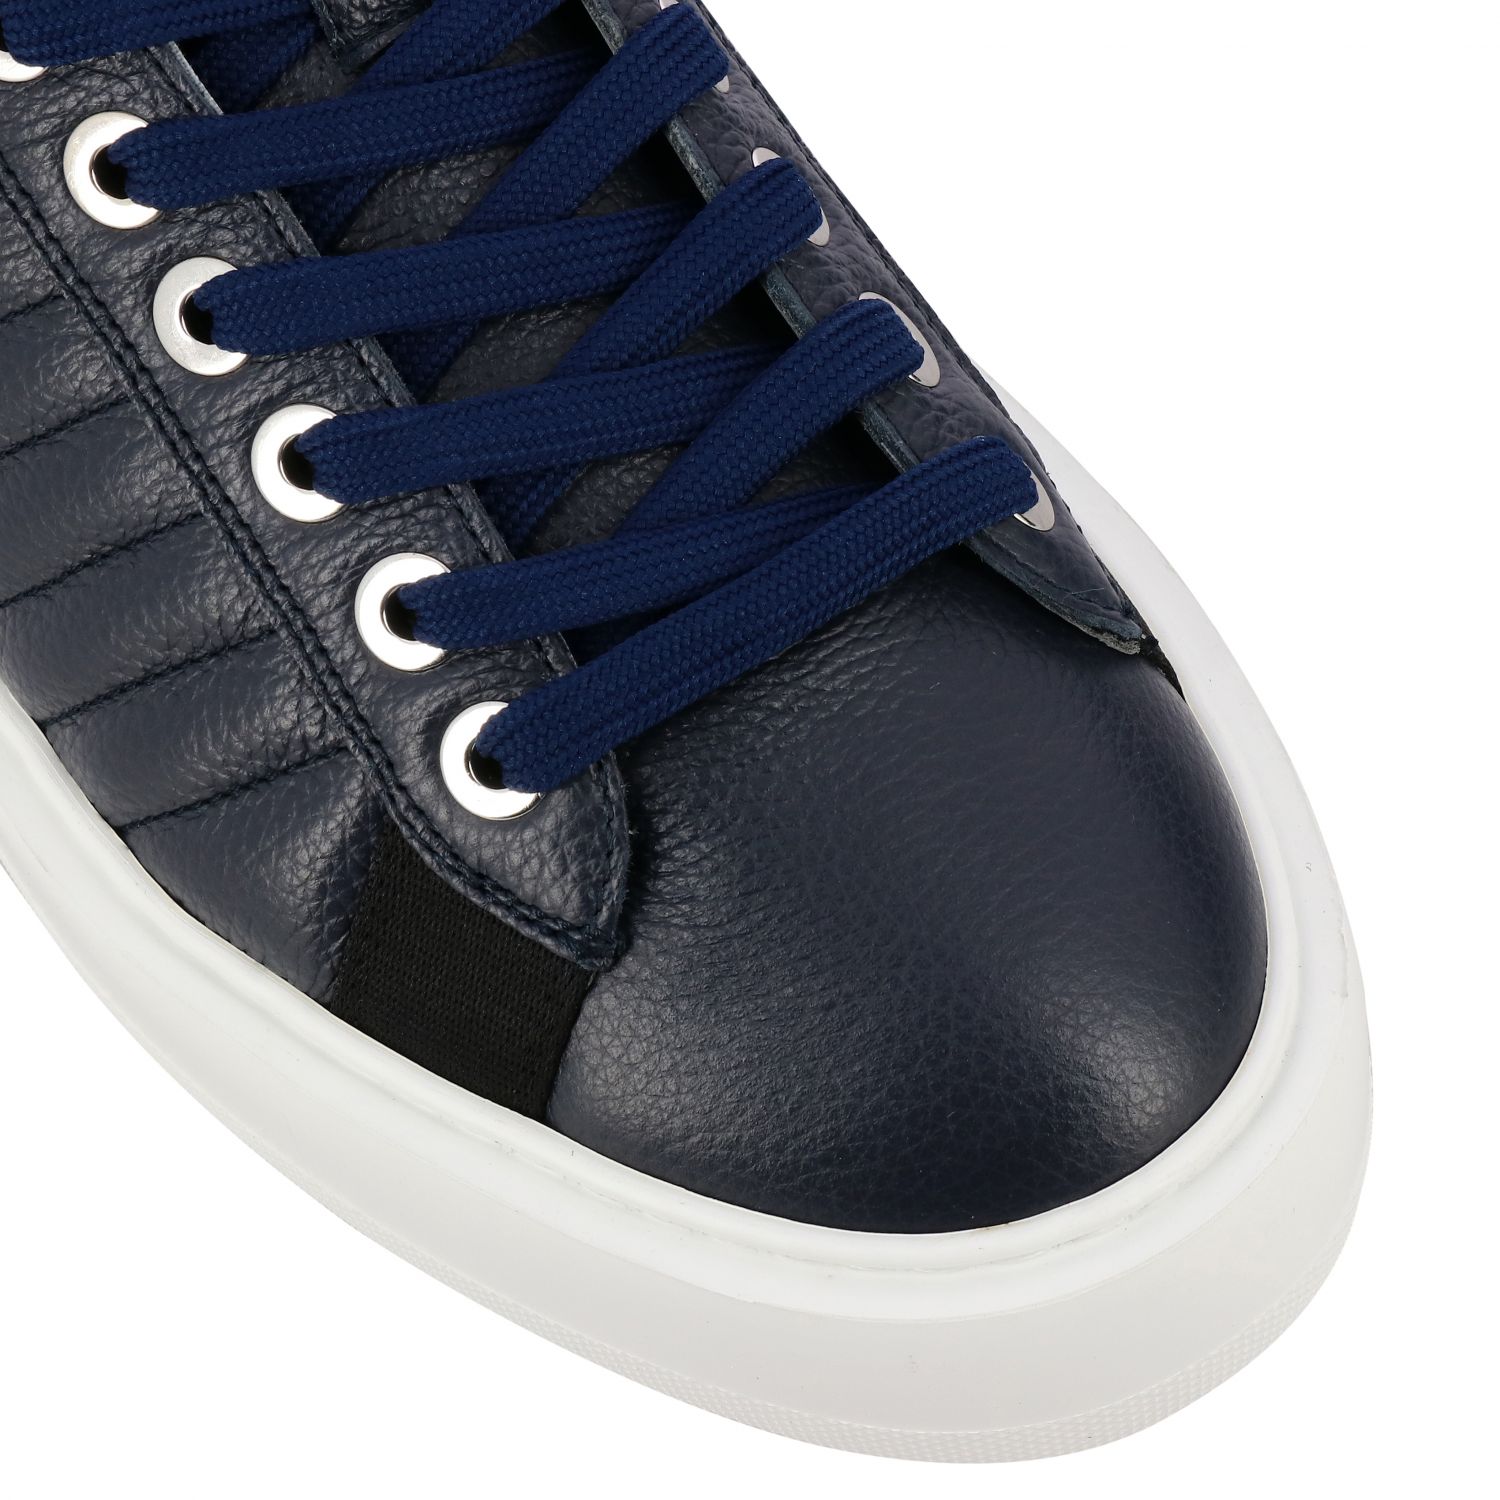 Paciotti 4Us Outlet: Shoes men - Navy | Sneakers Paciotti 4Us SU4TGR ...